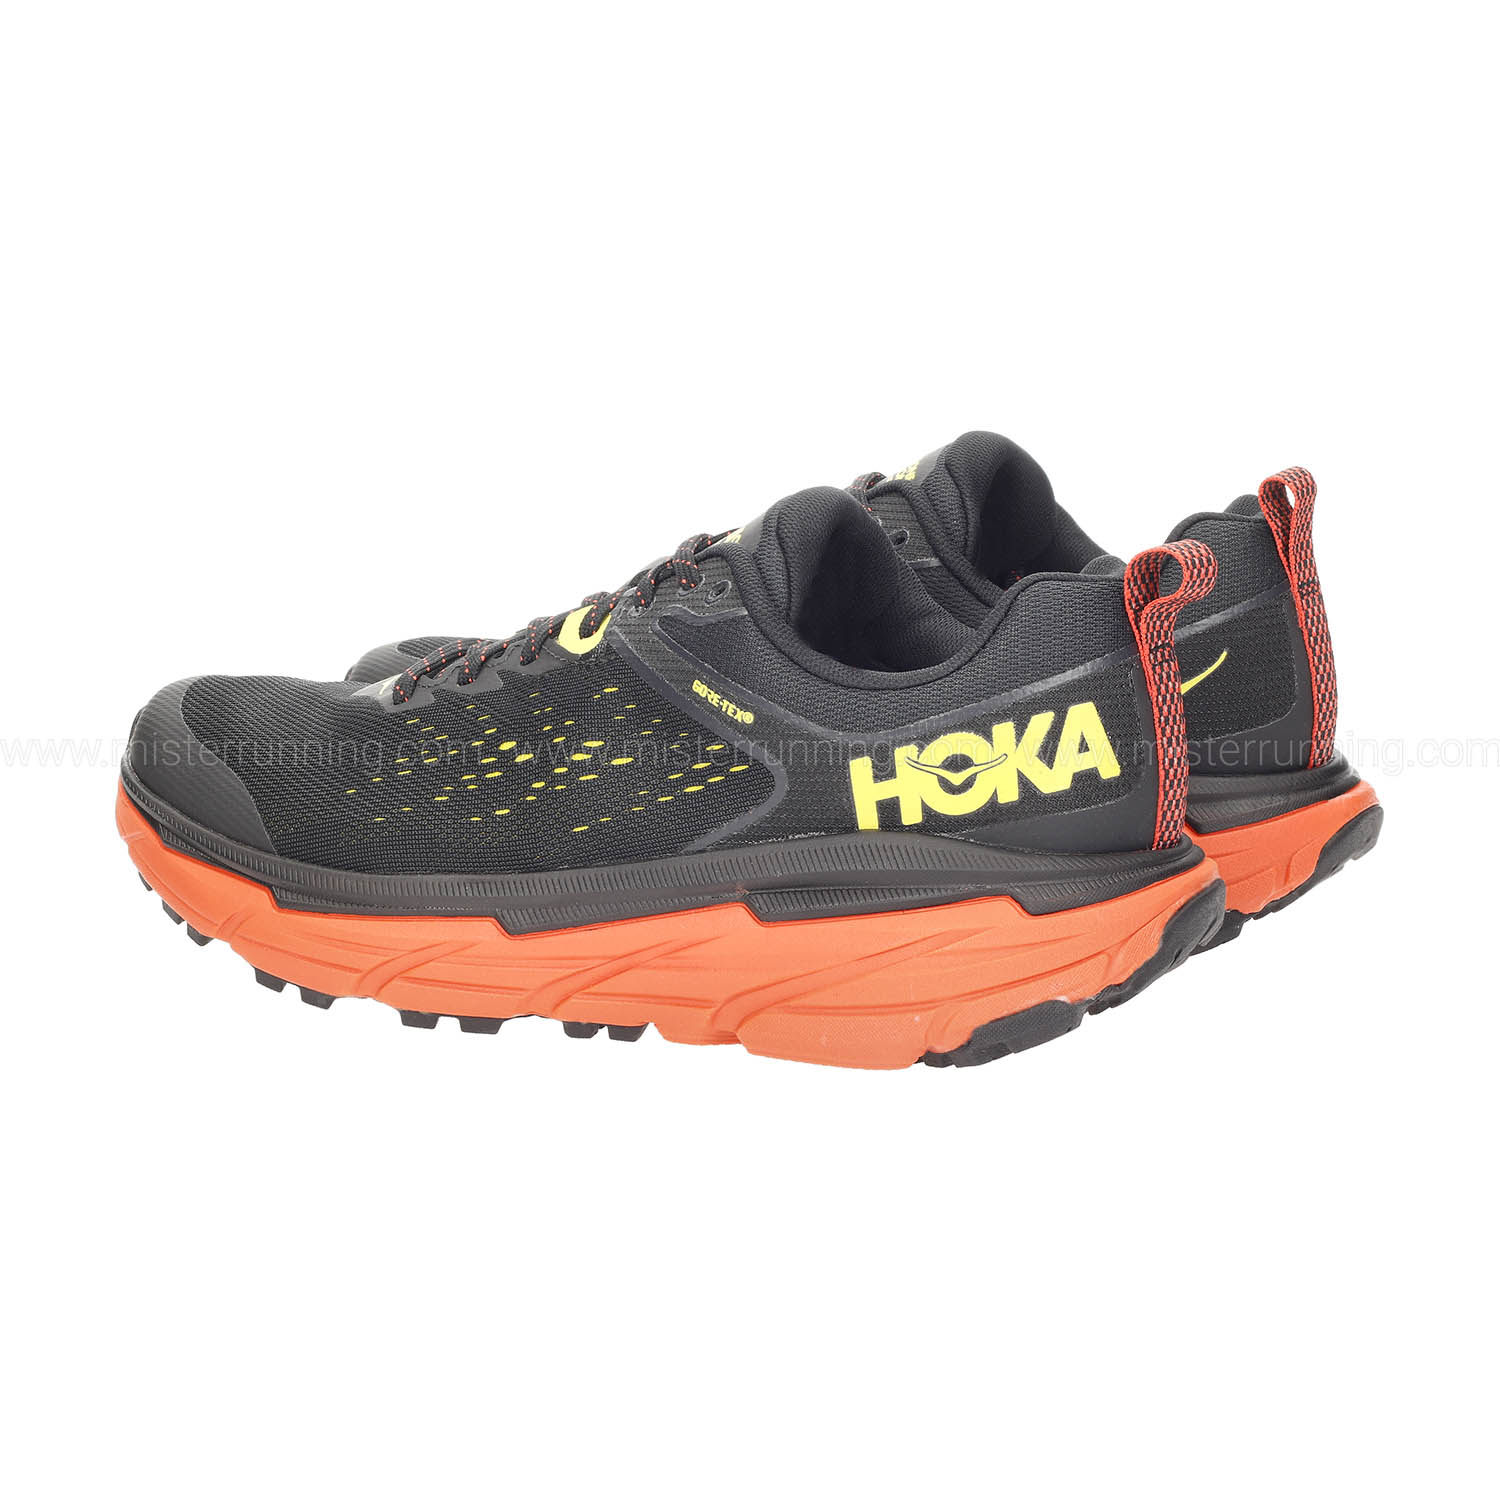 Hoka One One Challenger Atr 6 GTX Men's Trail Shoes - Black